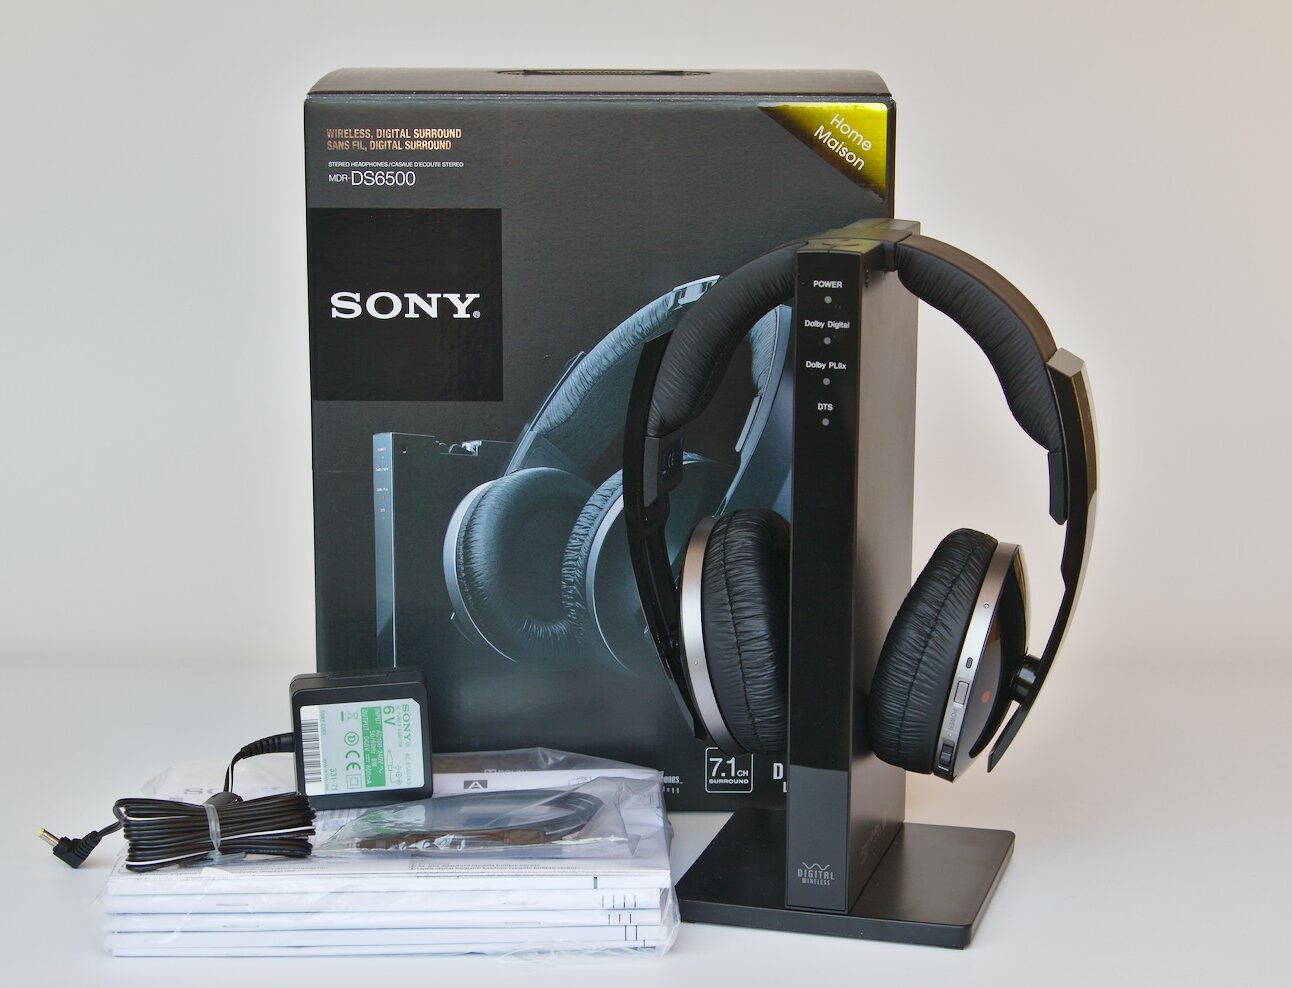 Sony MDR-DS6500 wireless headphones